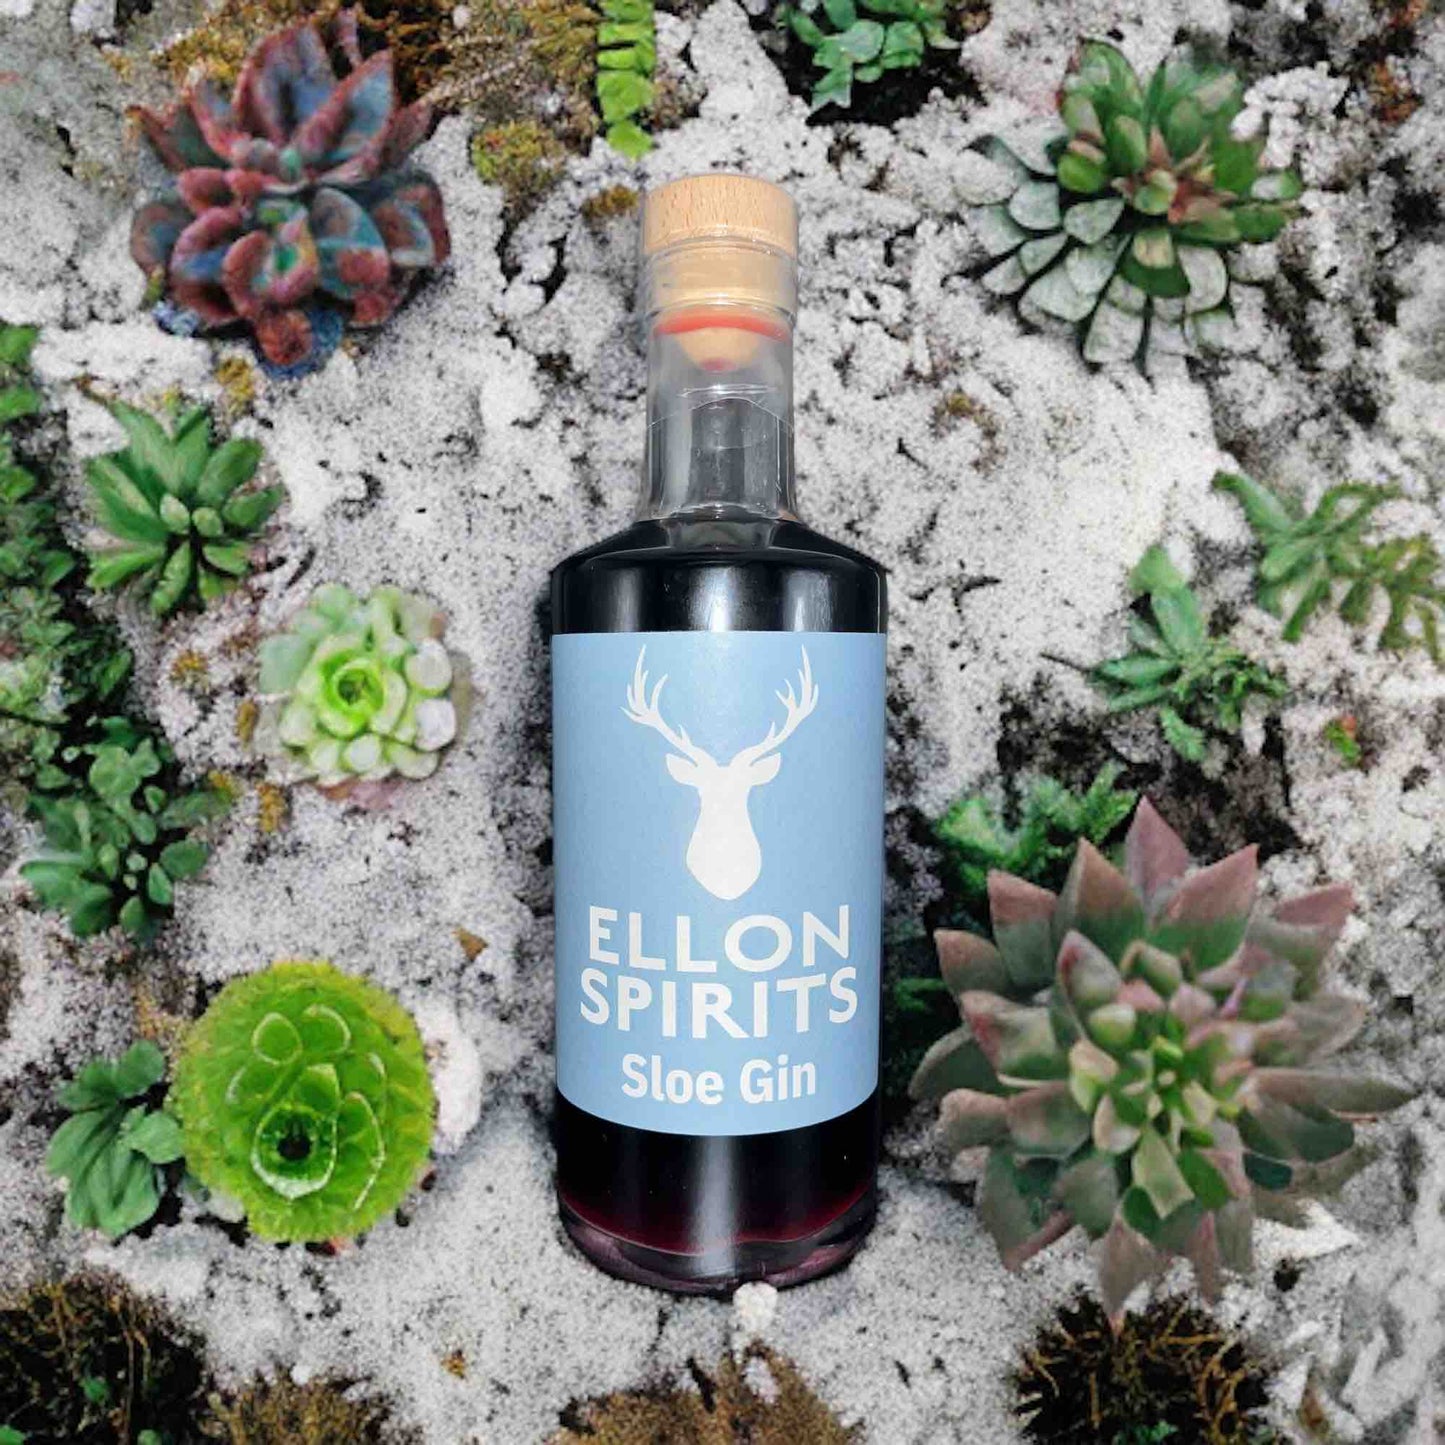 Ellon Spirits Sloe Gin 28% 500ml on beach with flowers